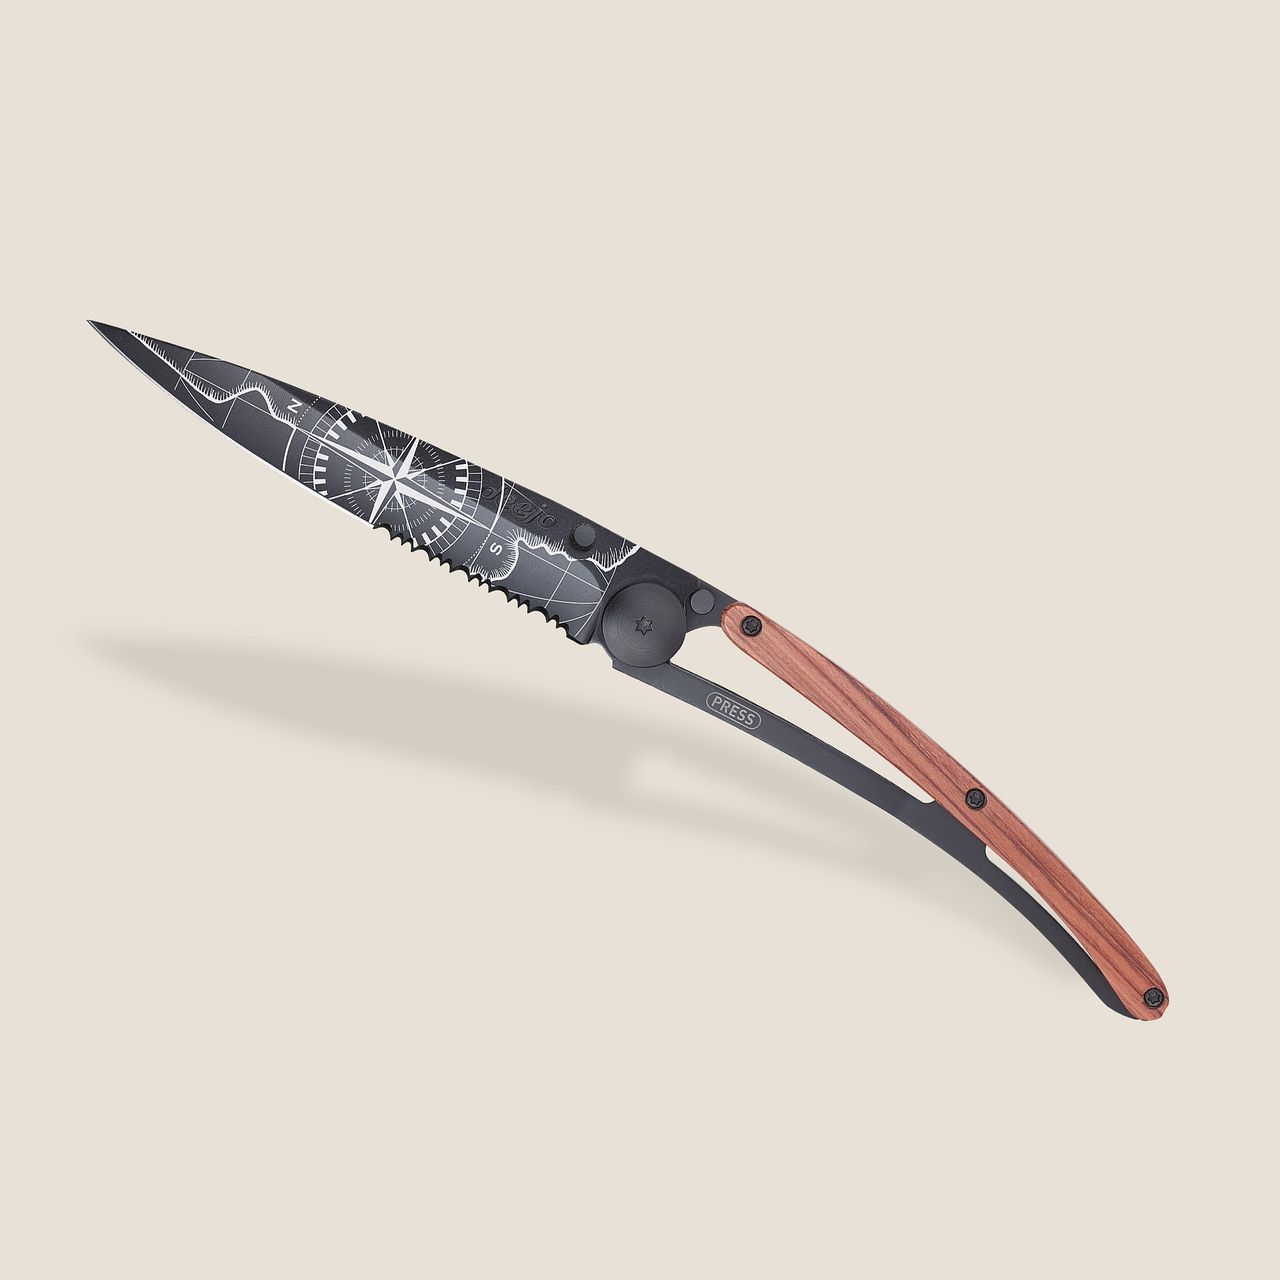 Deejo Serrated 37G Coral Wood / Terra Incognita Pocket Knife